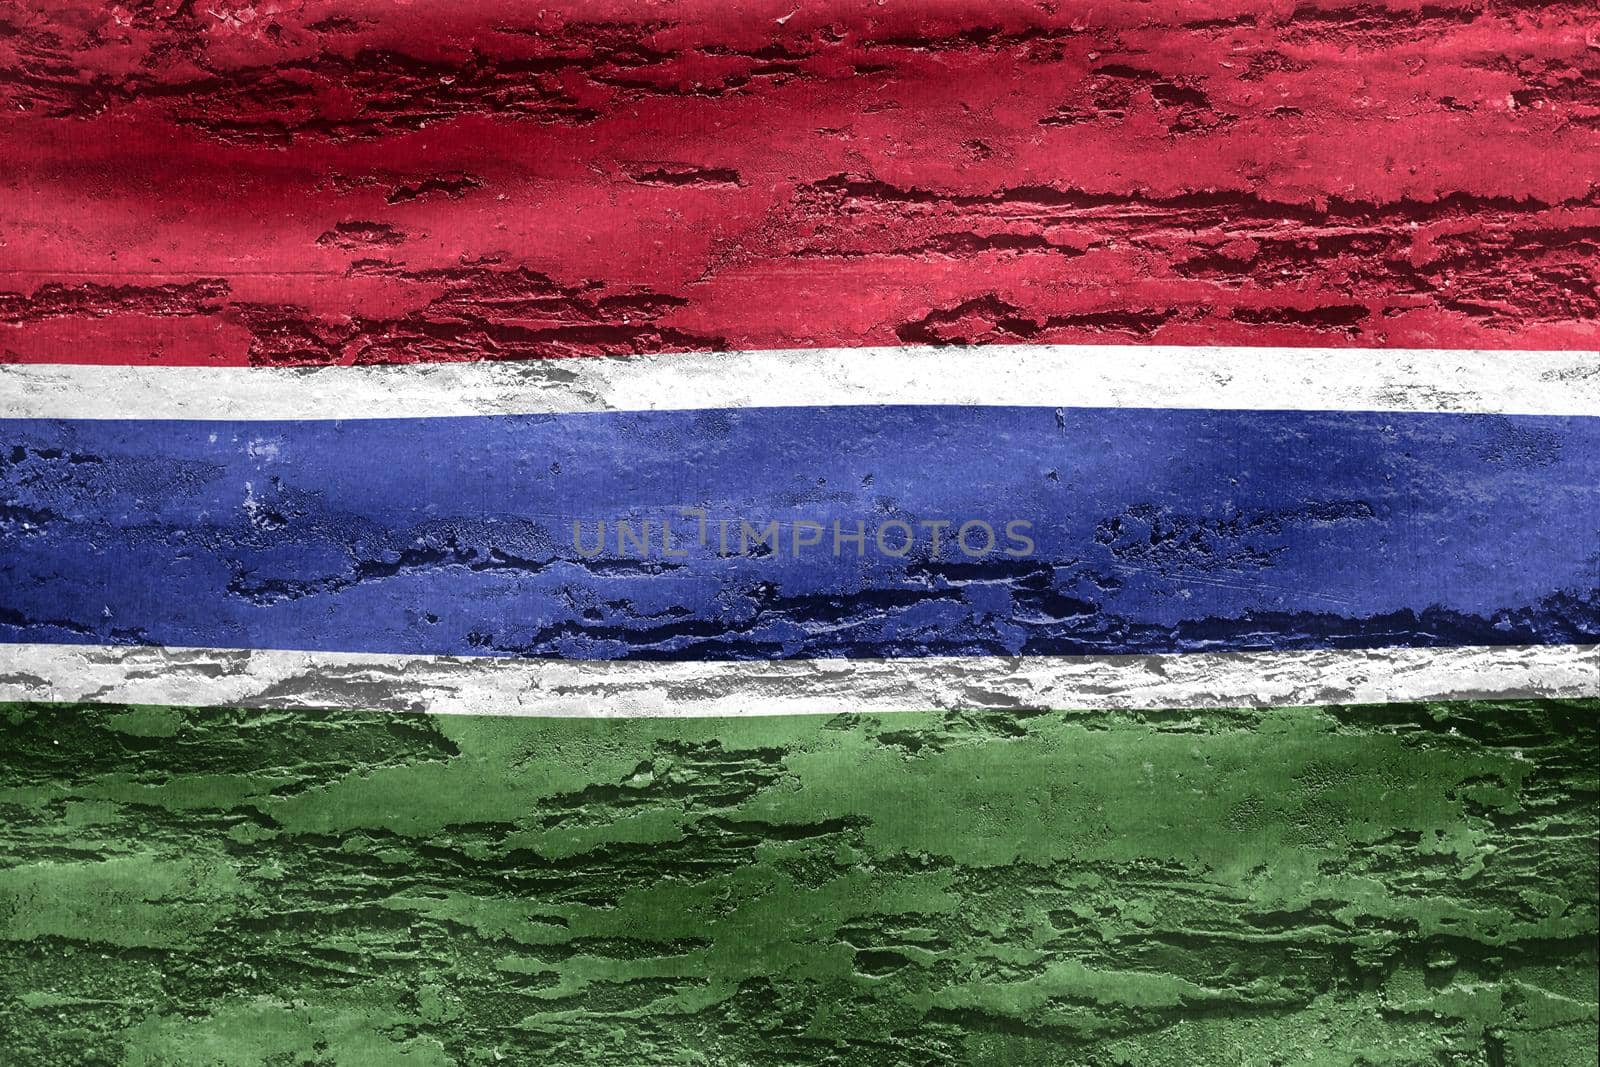 Gambia flag - realistic waving fabric flag by MP_foto71